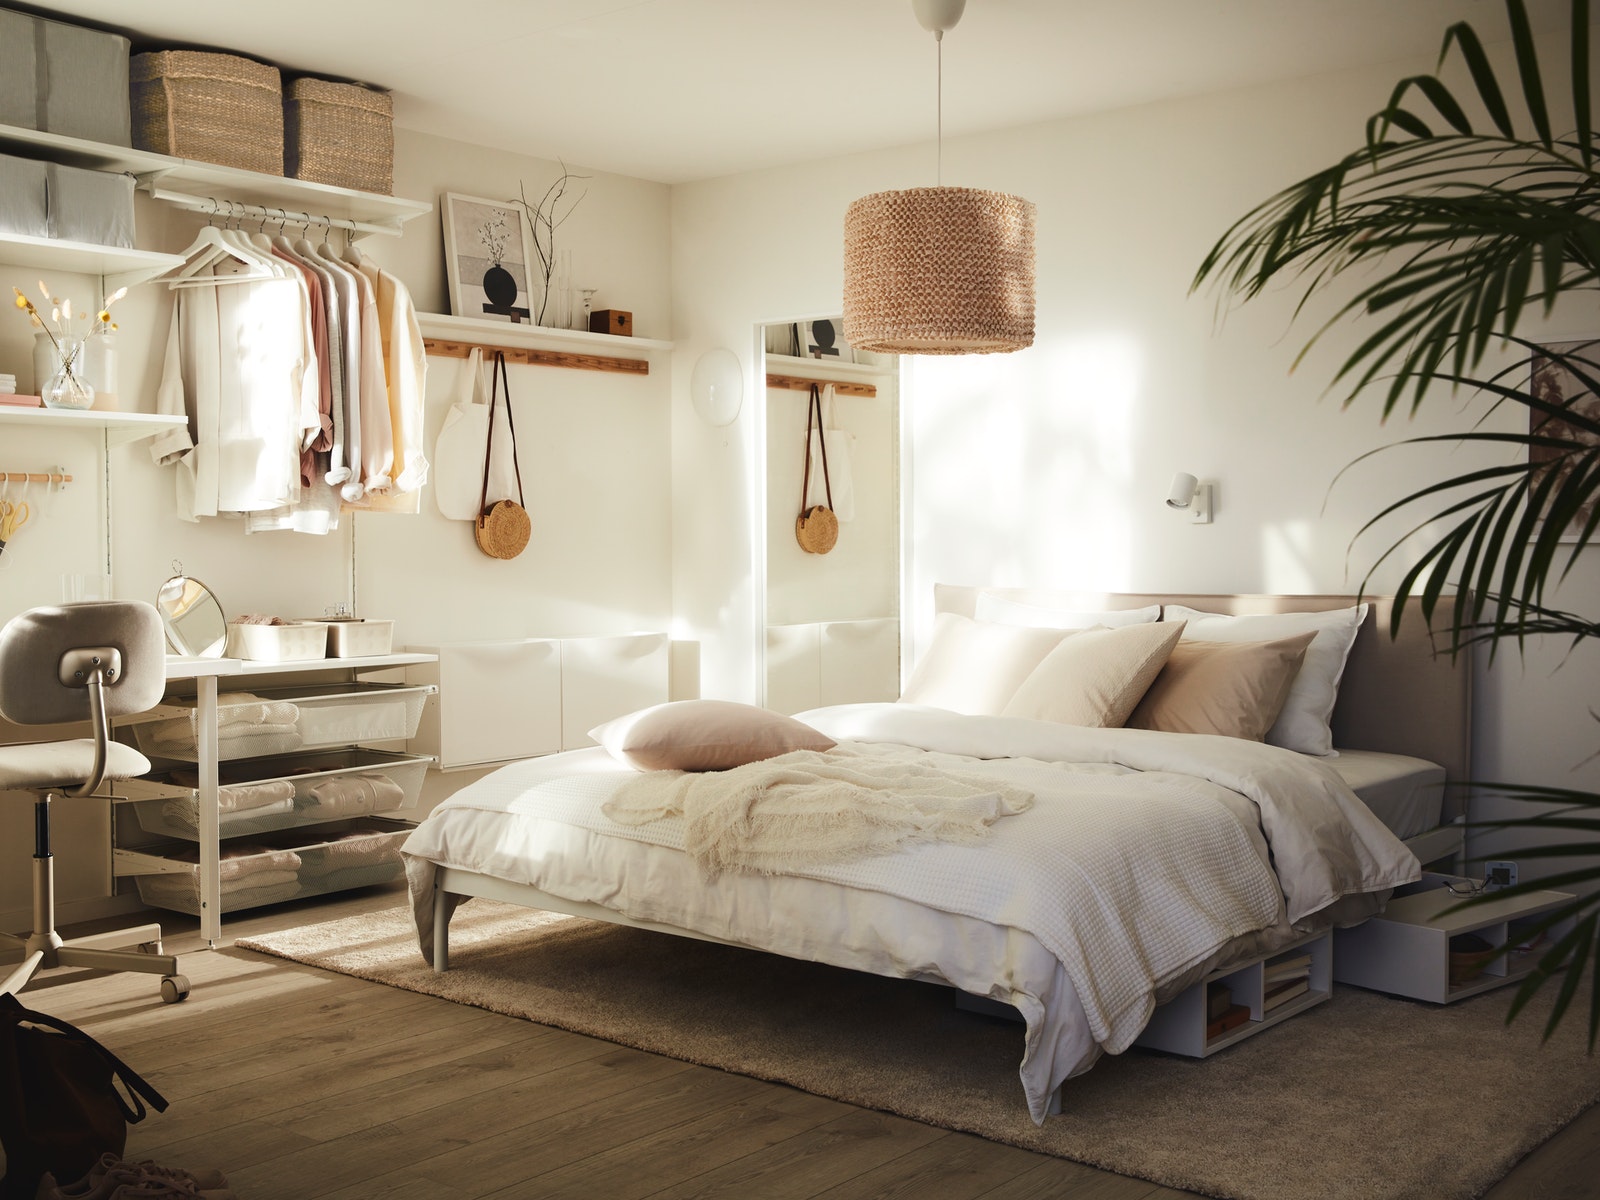 IKEA - Ένα μικρό, ήρεμο και οργανωμένο υπνοδωμάτιο